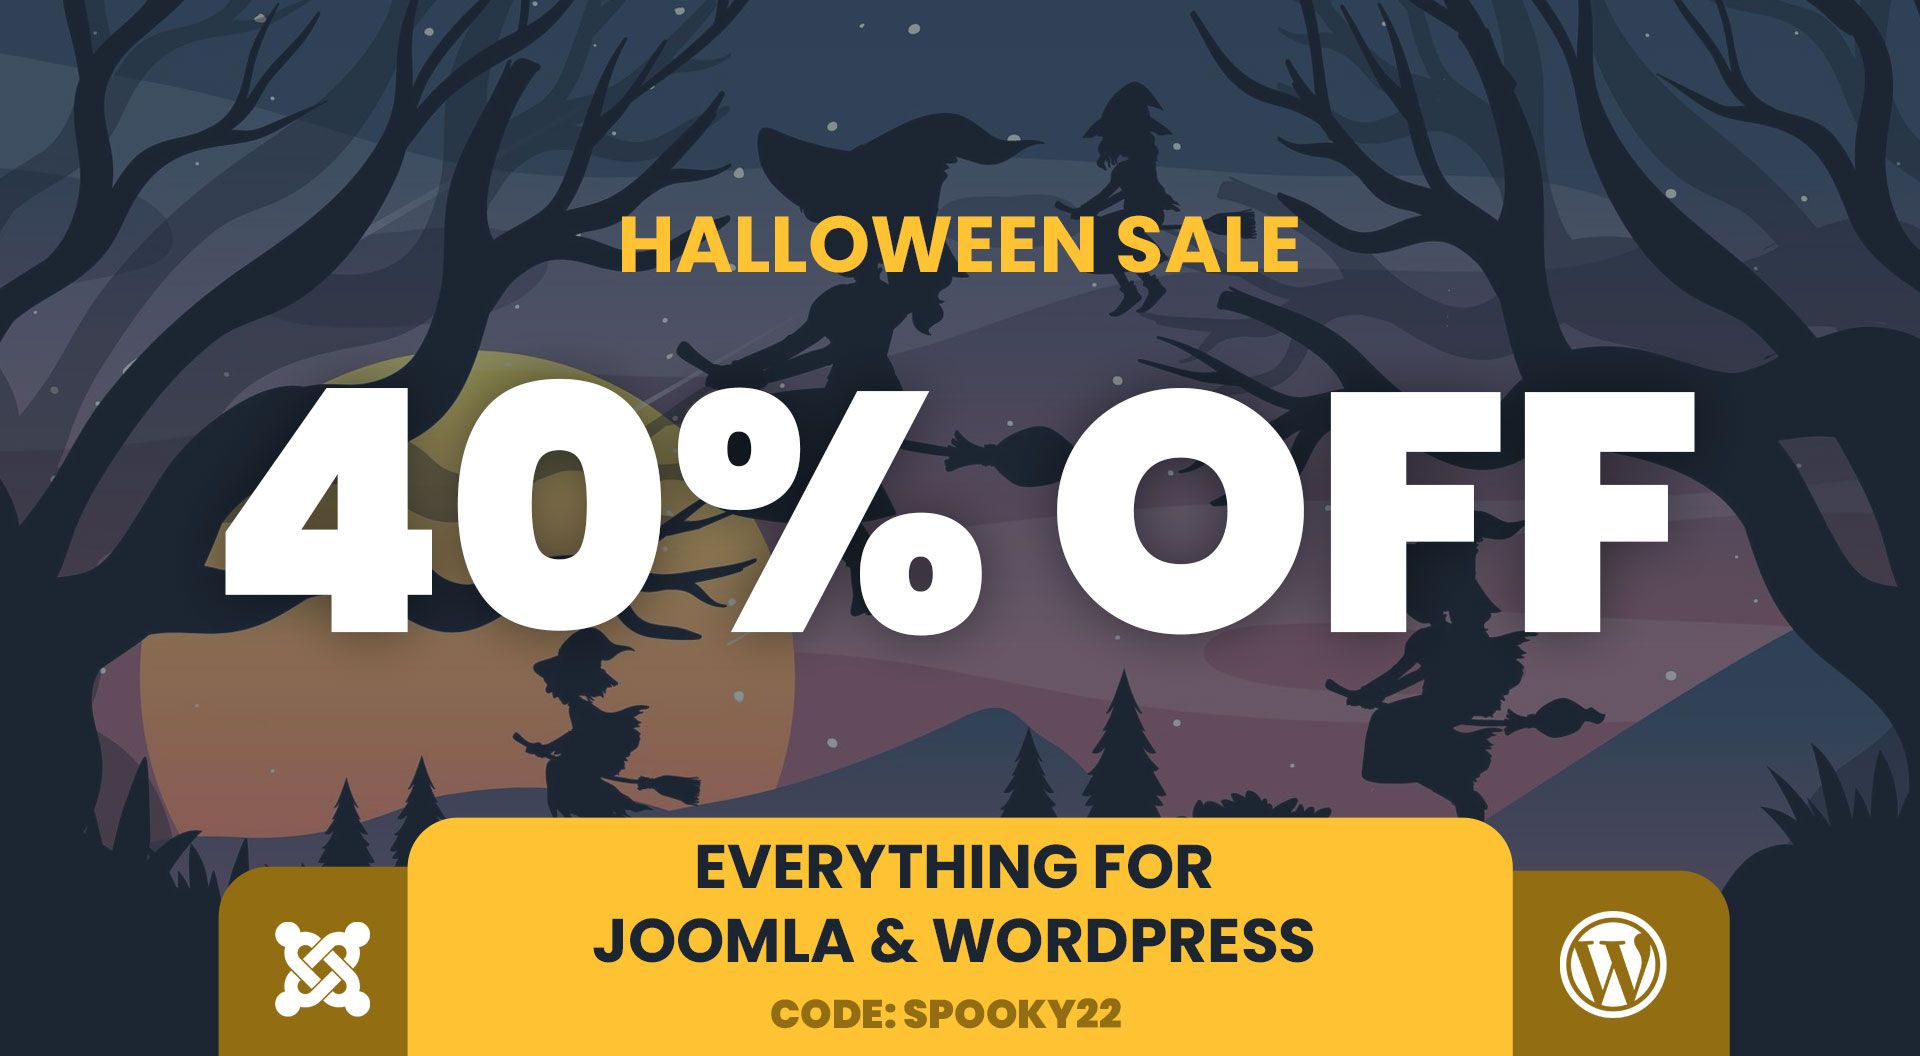 Halloween SALE -40% OFF on ALL Joomla and WordPress products